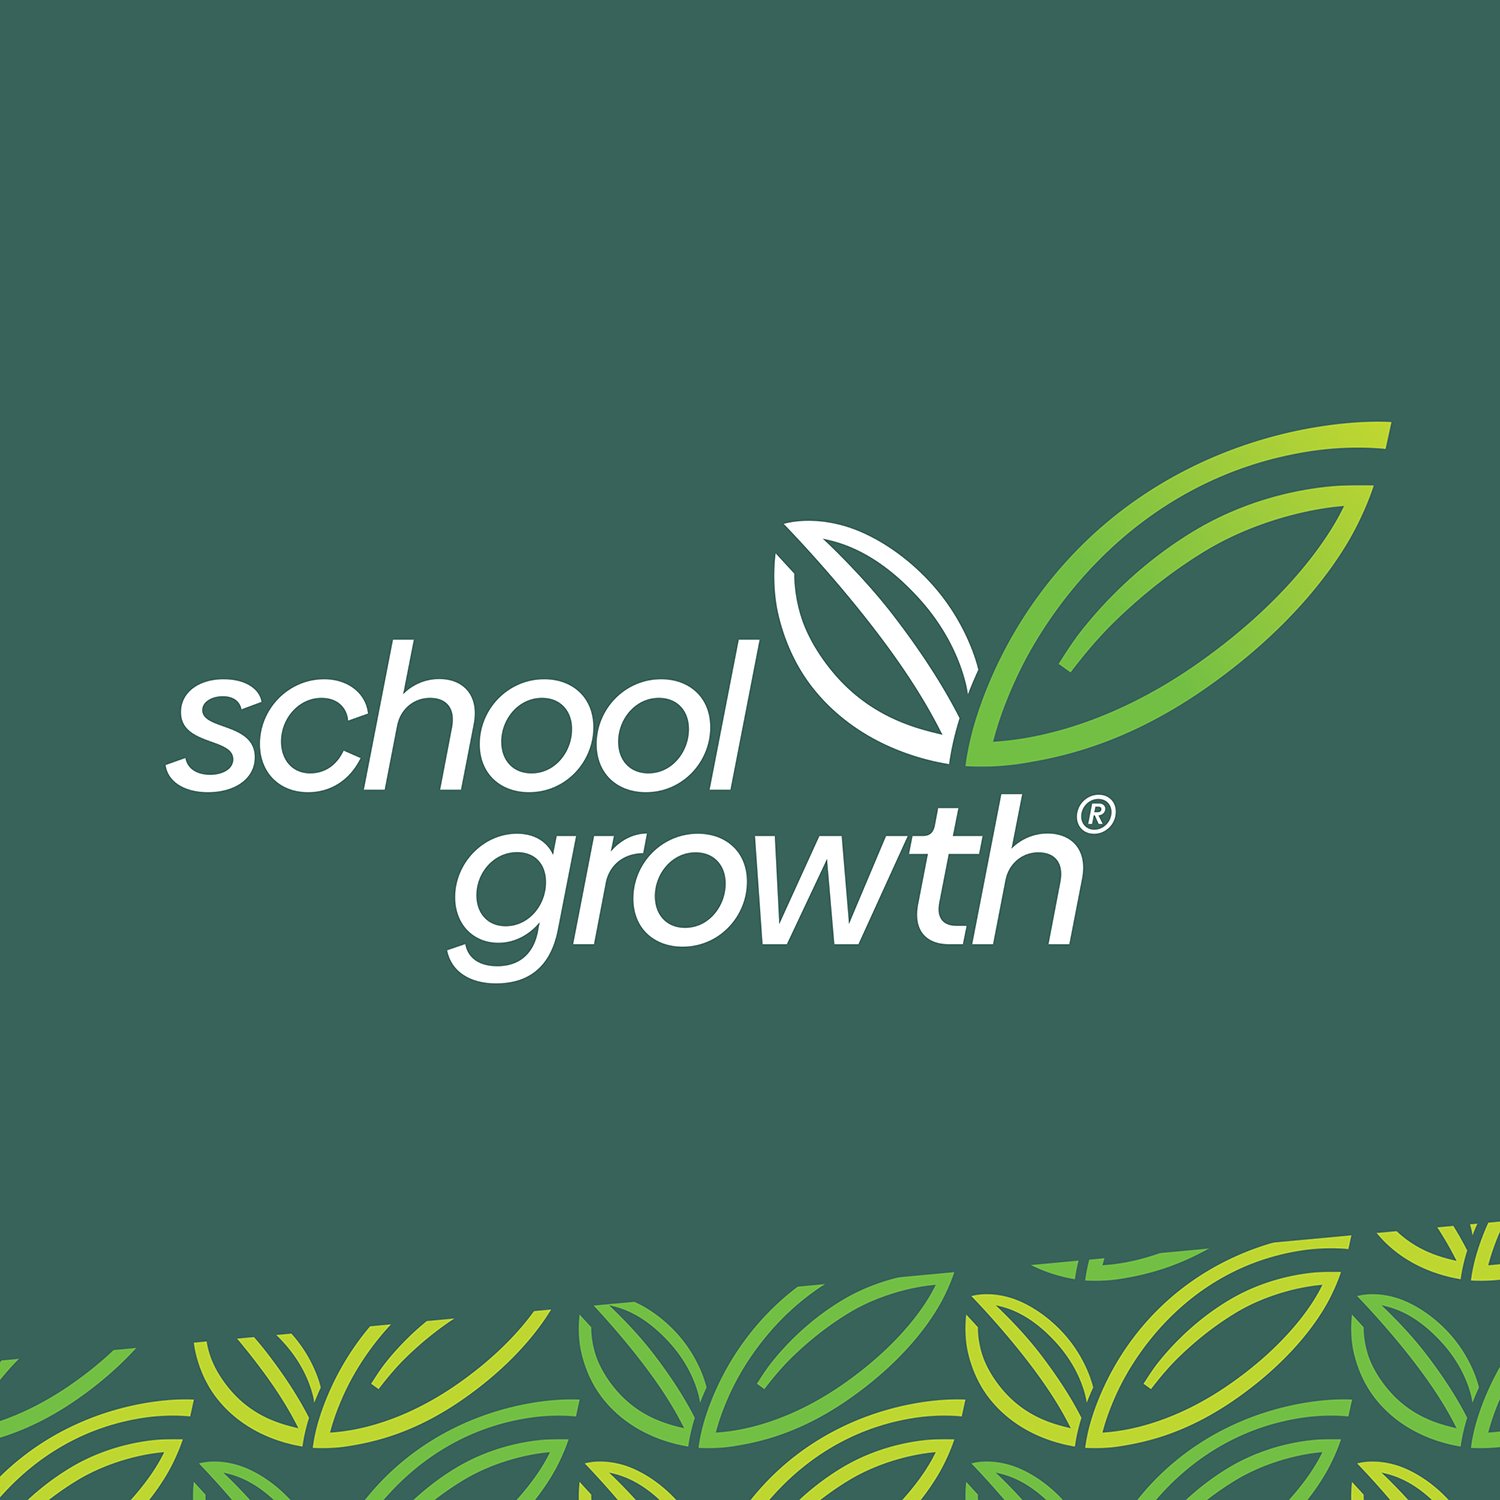 Pareawa-Banks-Ave-School-Logo-Christchurch-NZ - School Branding Matters